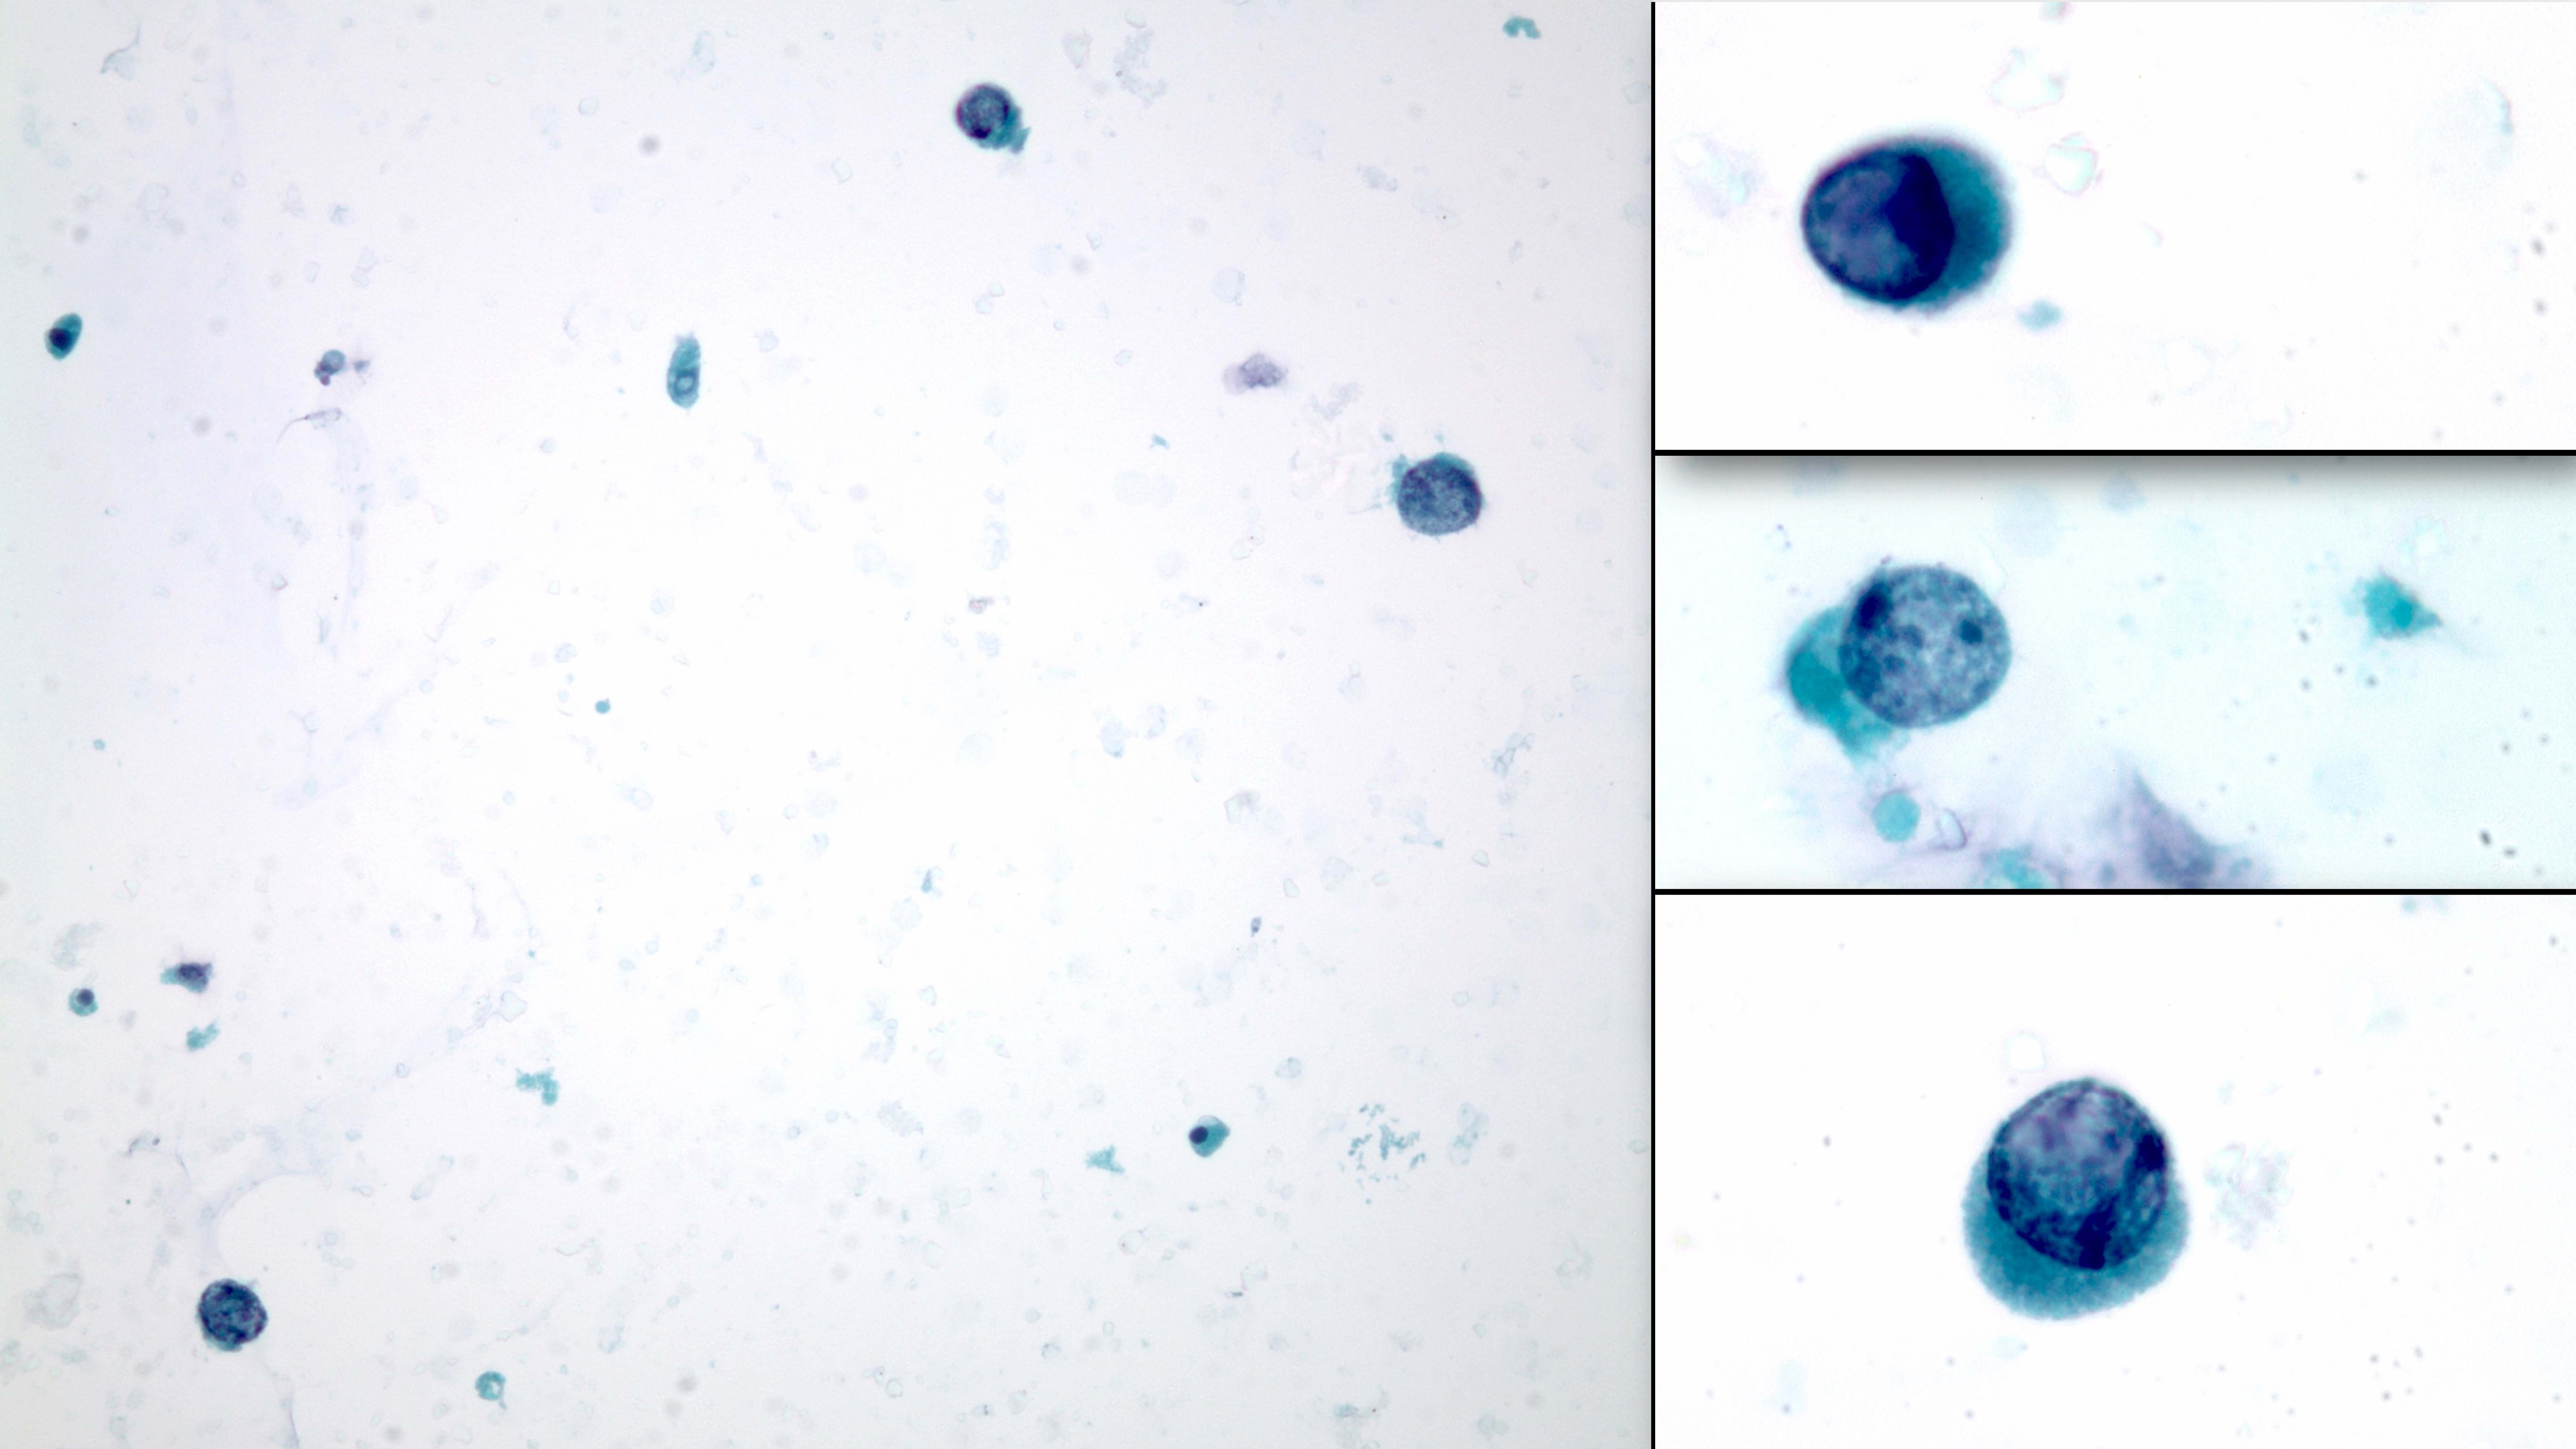 Decoy cells in urine cytology